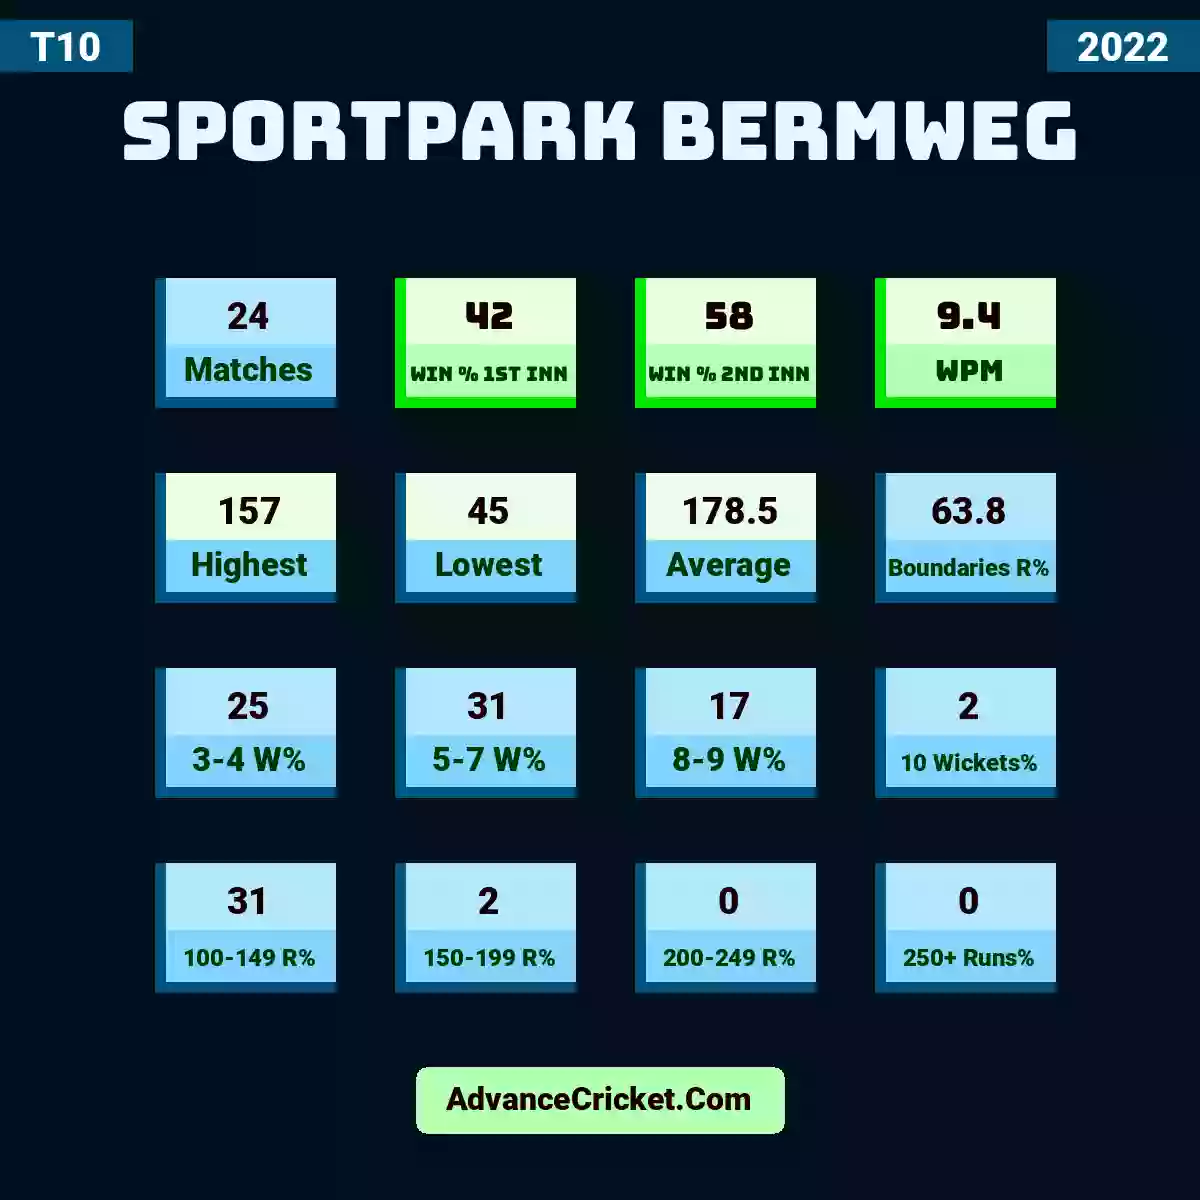 Image showing Sportpark Bermweg with Matches: 24, Win % 1st Inn: 42, Win % 2nd Inn: 58, WPM: 9.4, Highest: 157, Lowest: 45, Average: 178.5, Boundaries R%: 63.8, 3-4 W%: 25, 5-7 W%: 31, 8-9 W%: 17, 10 Wickets%: 2, 100-149 R%: 31, 150-199 R%: 2, 200-249 R%: 0, 250+ Runs%: 0.